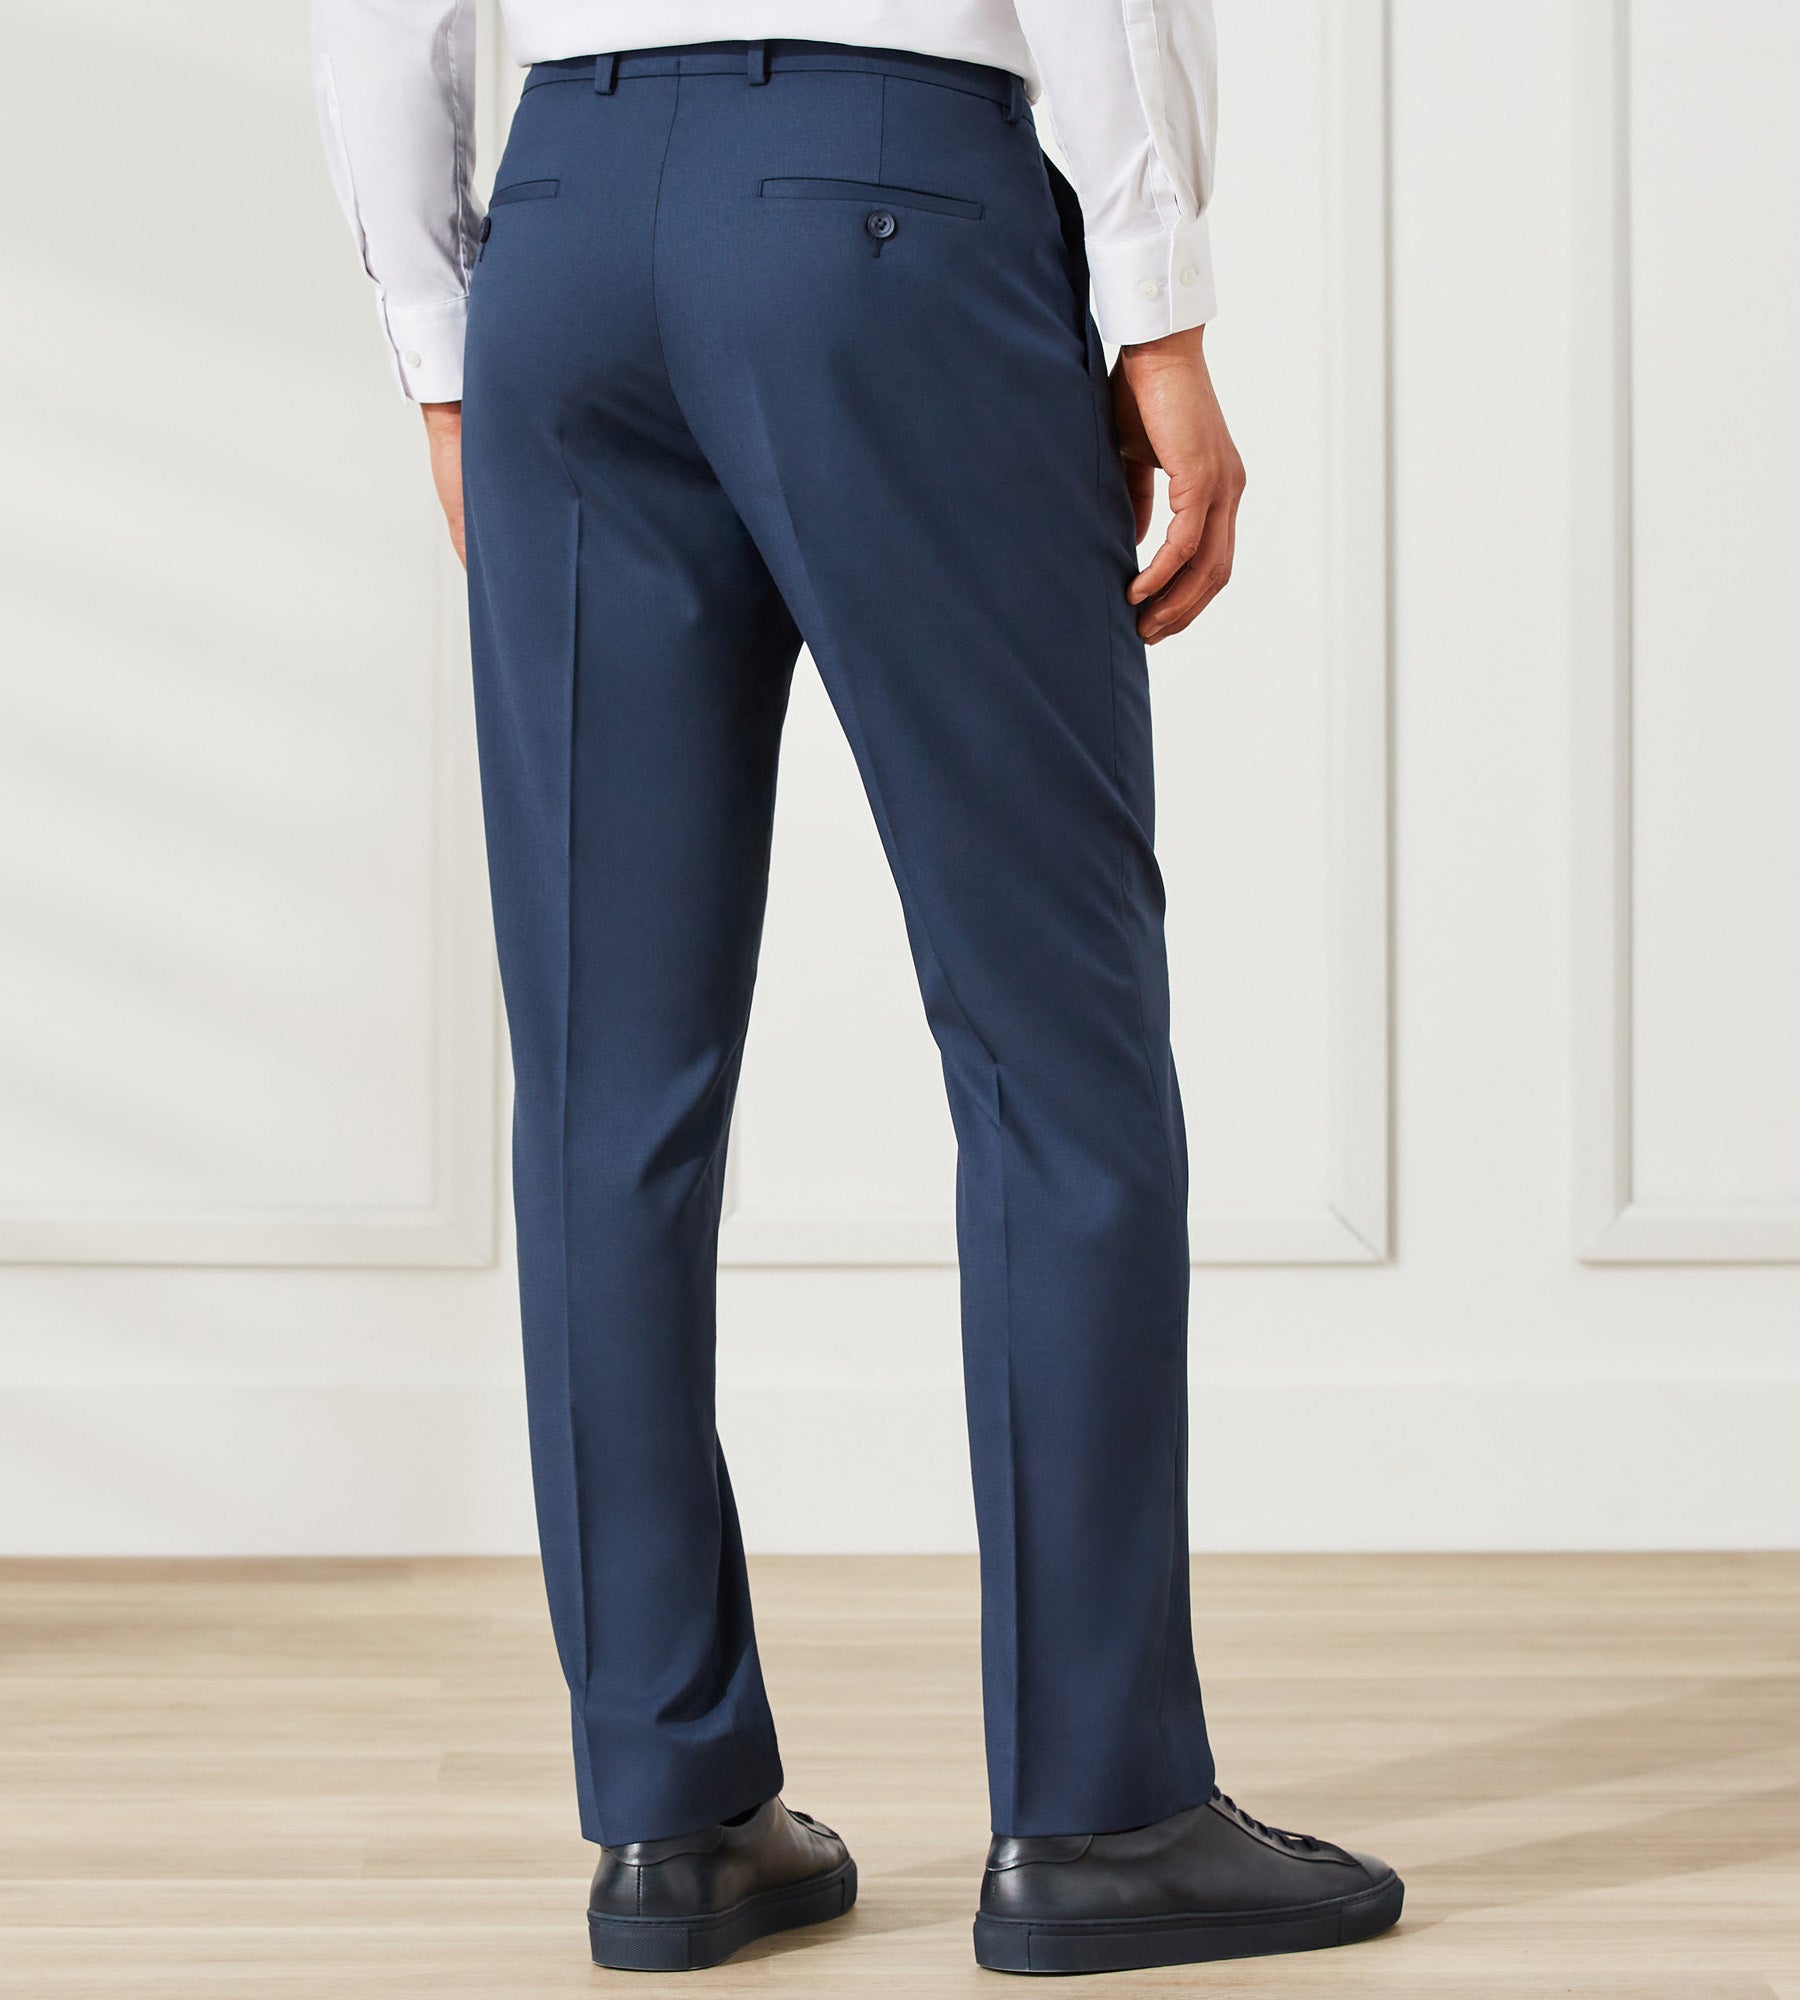 Men's Blue Classic & Modern Fit Dress Pants - Express